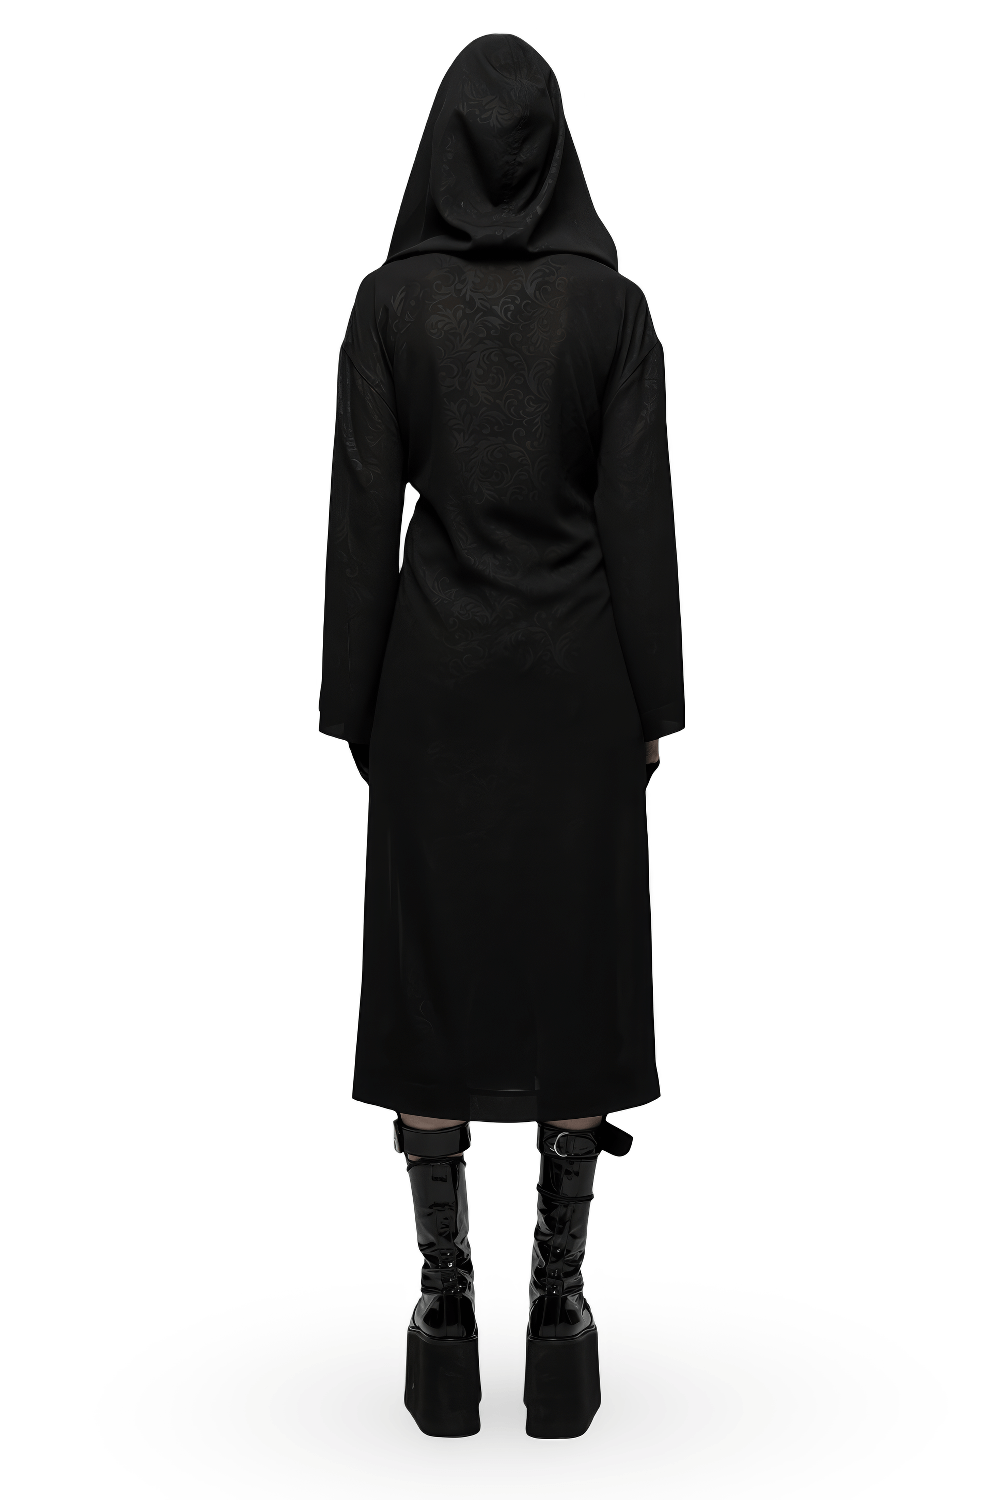 Langer Gothic-Mantel aus Chiffon mit dunklem Musterdetail